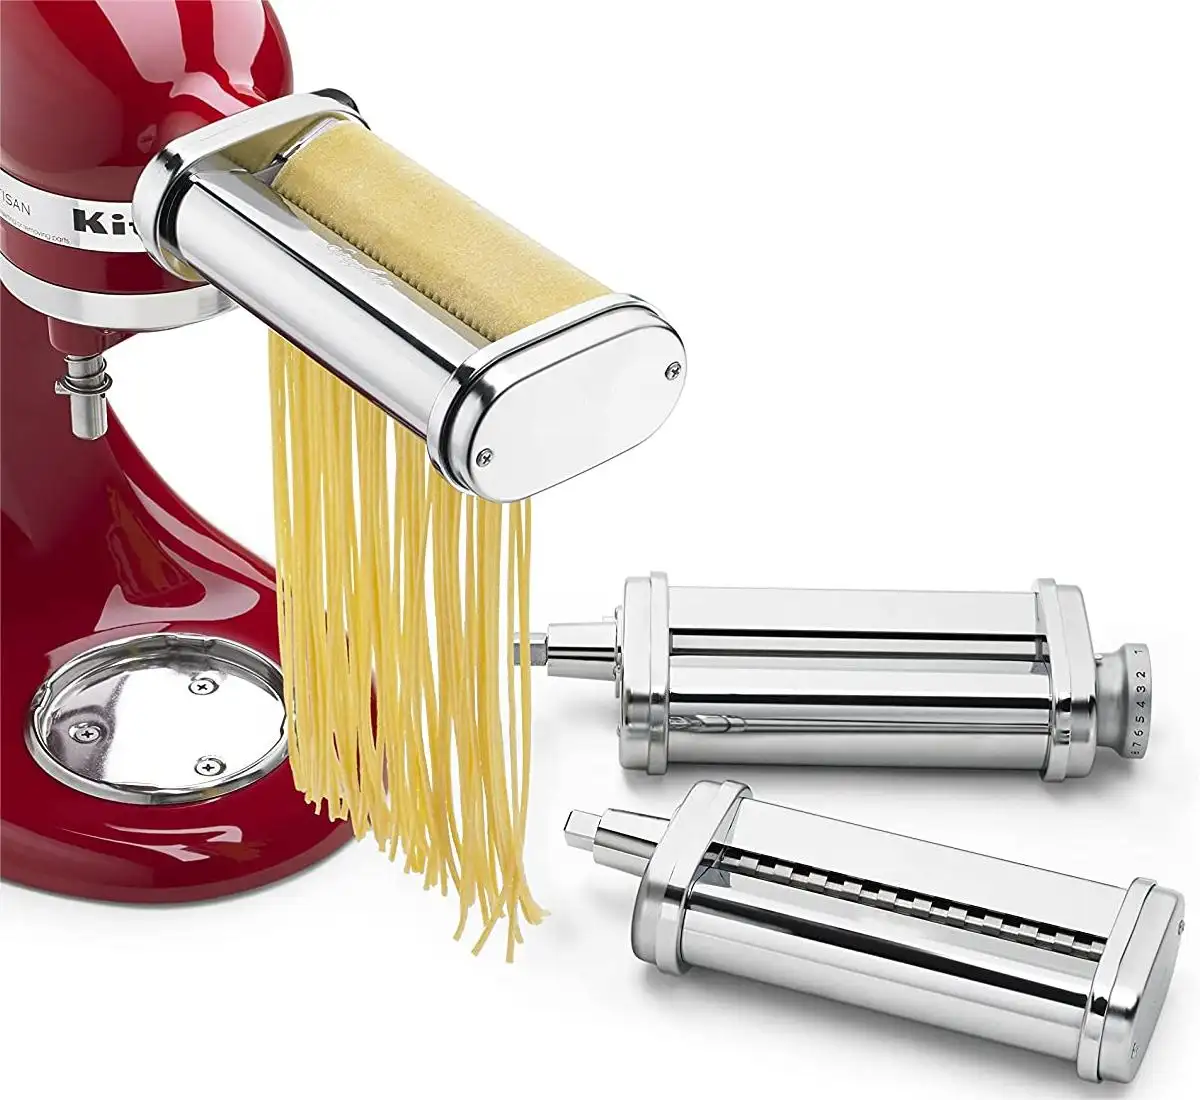 Aksesori mesin Pasta, pembuat Pasta tempel 3 buah Roller fettuccine pembuat mie spaghetti dudukan mixer